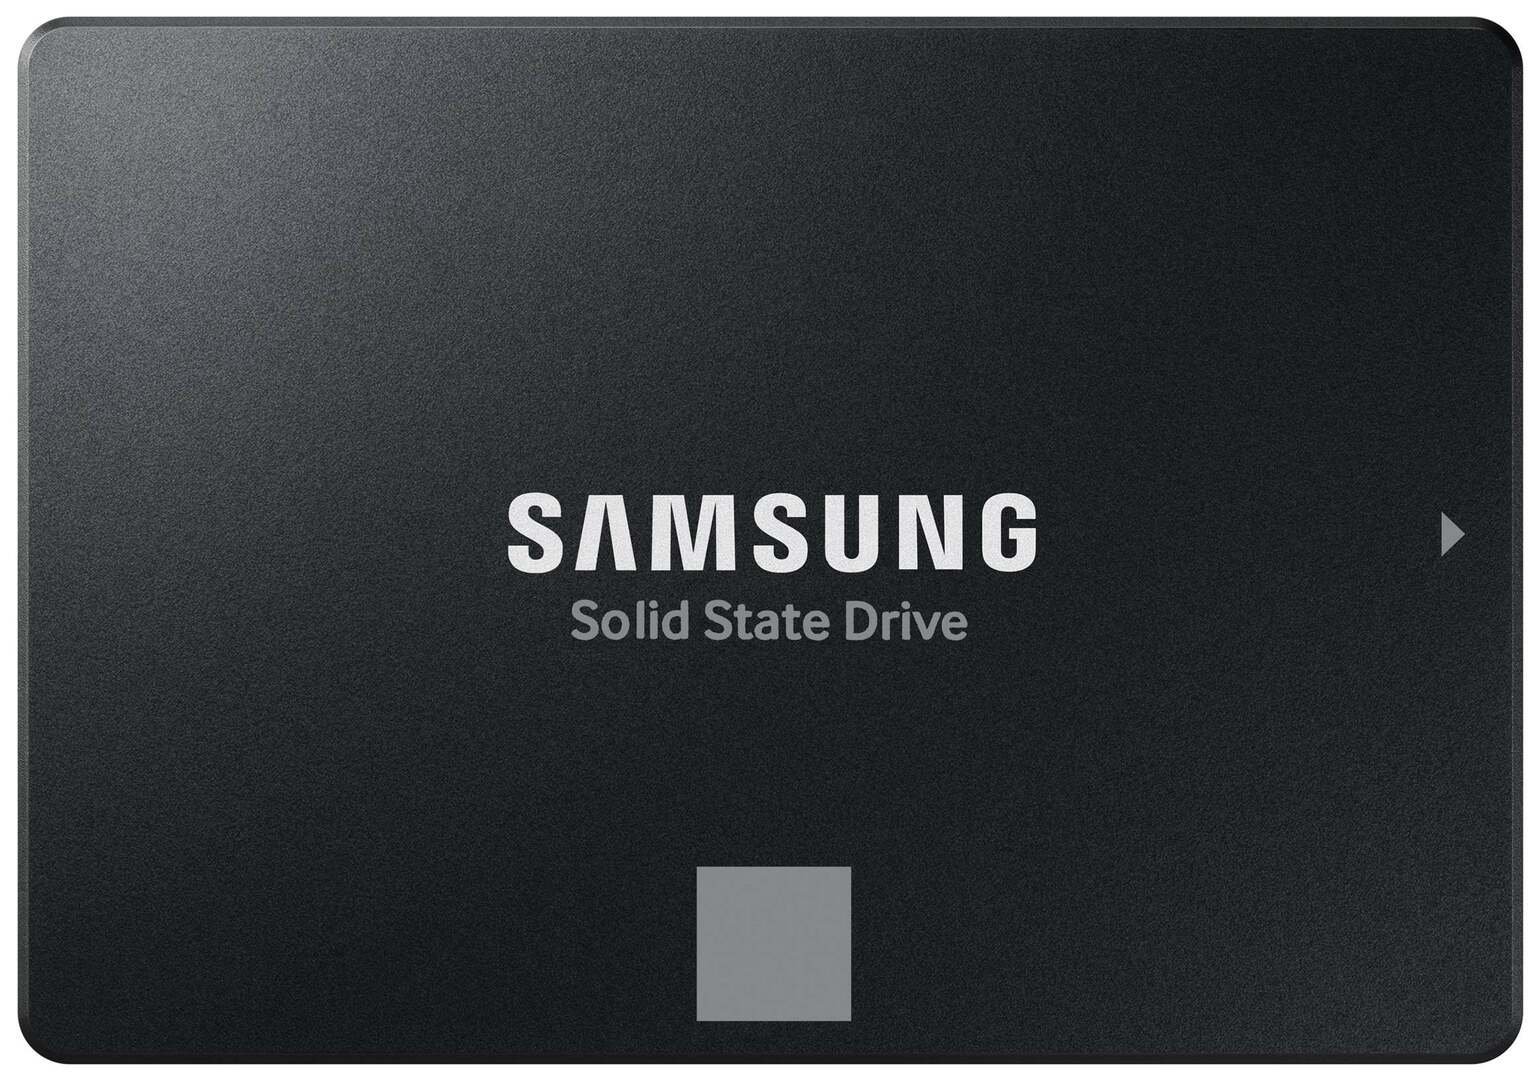 Samsung 870 EVO 1TB Internal SSD